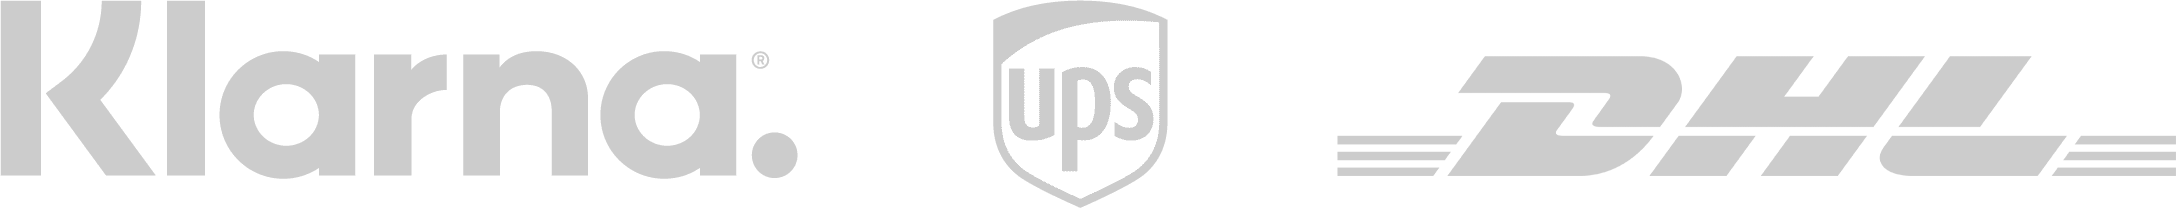 Klarna-UPS-DHL-Luie